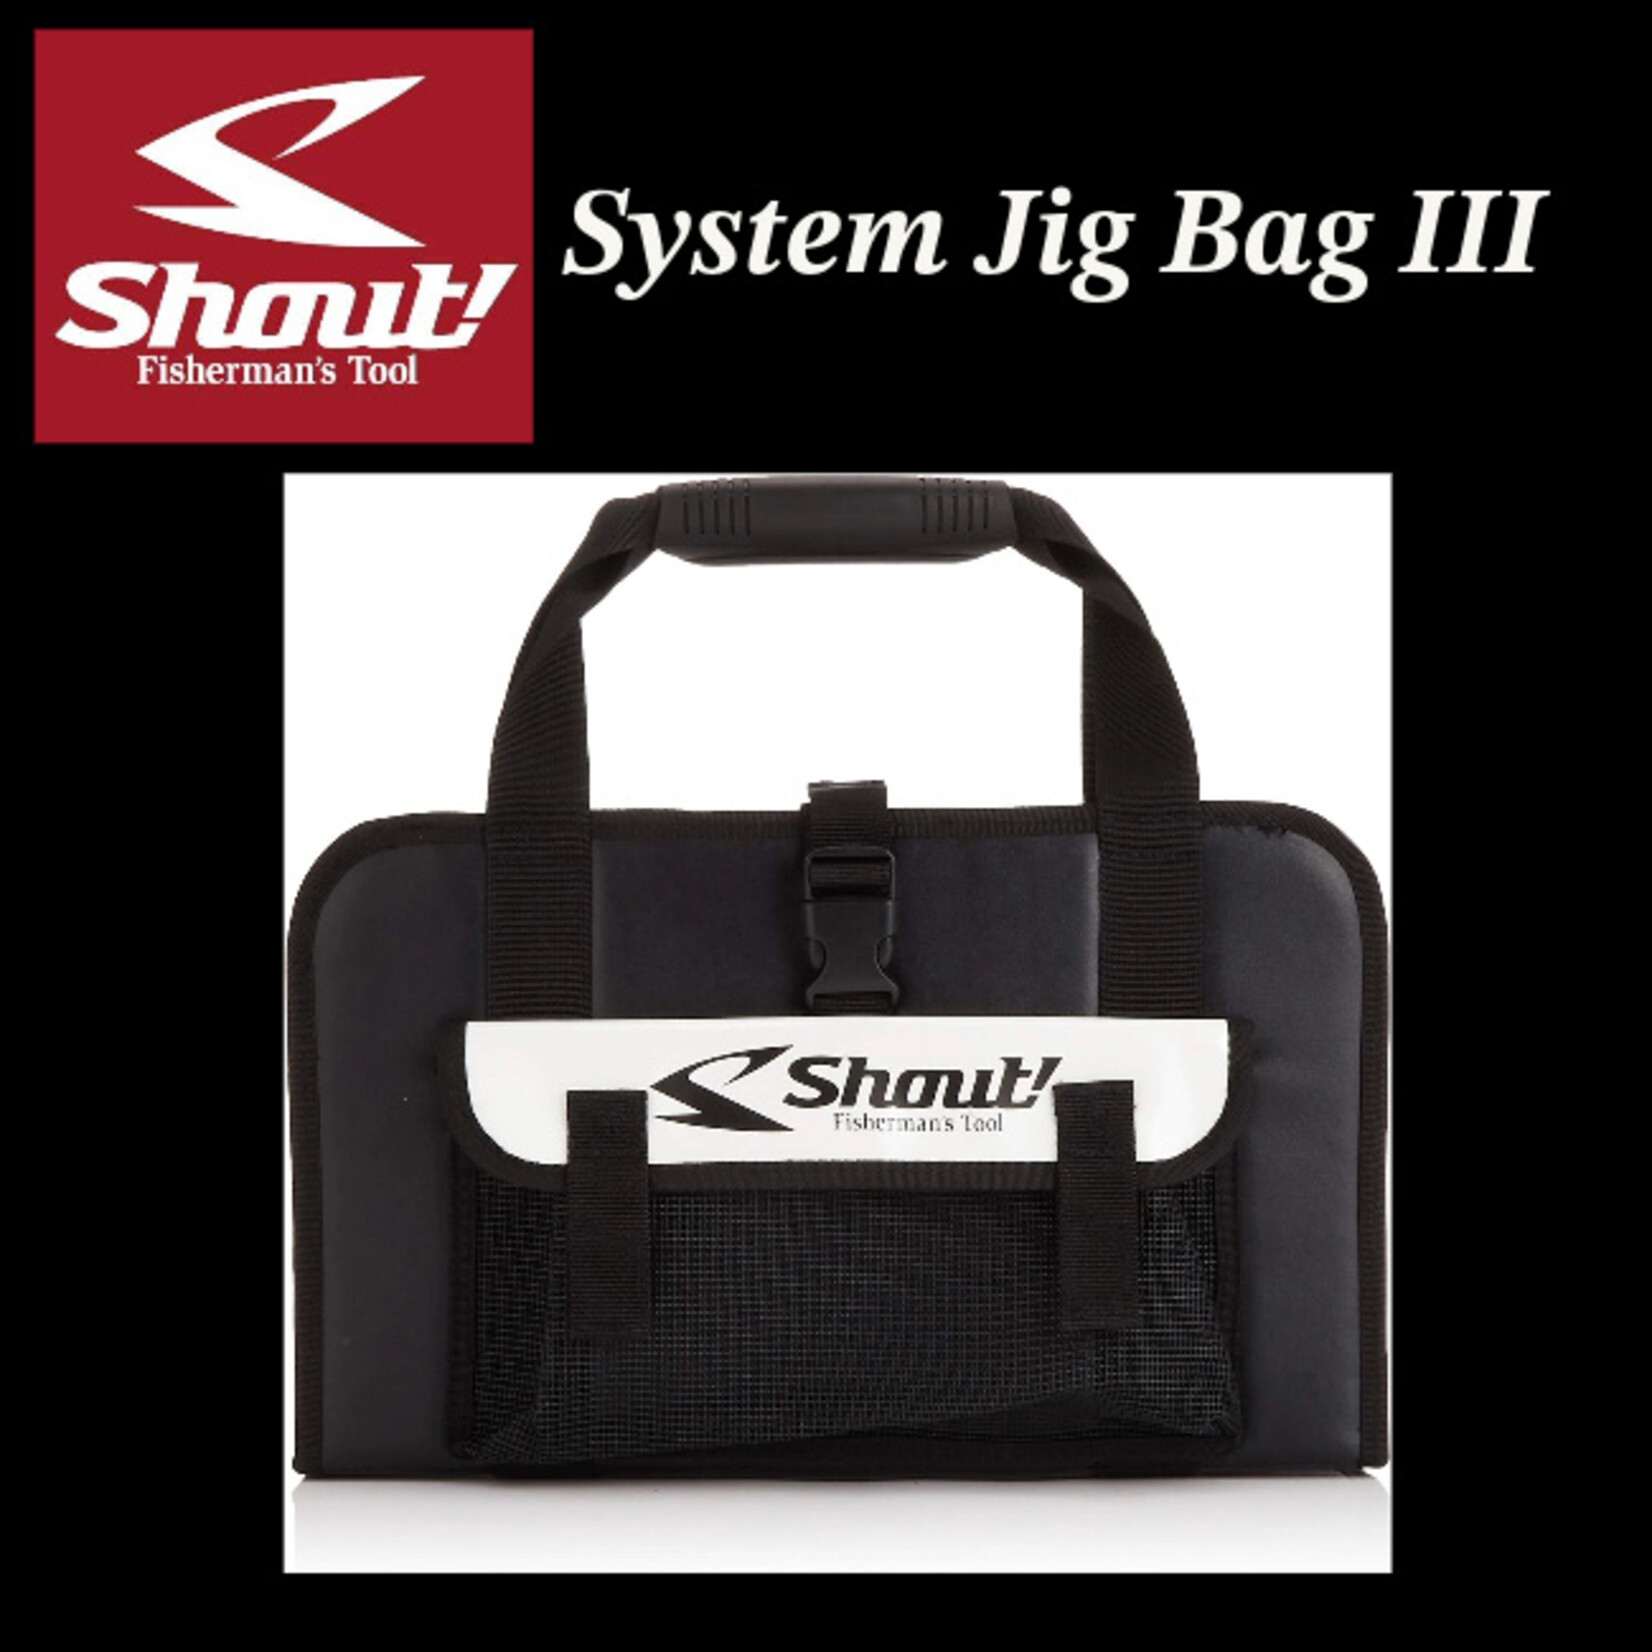 Shout System Jig Bag III